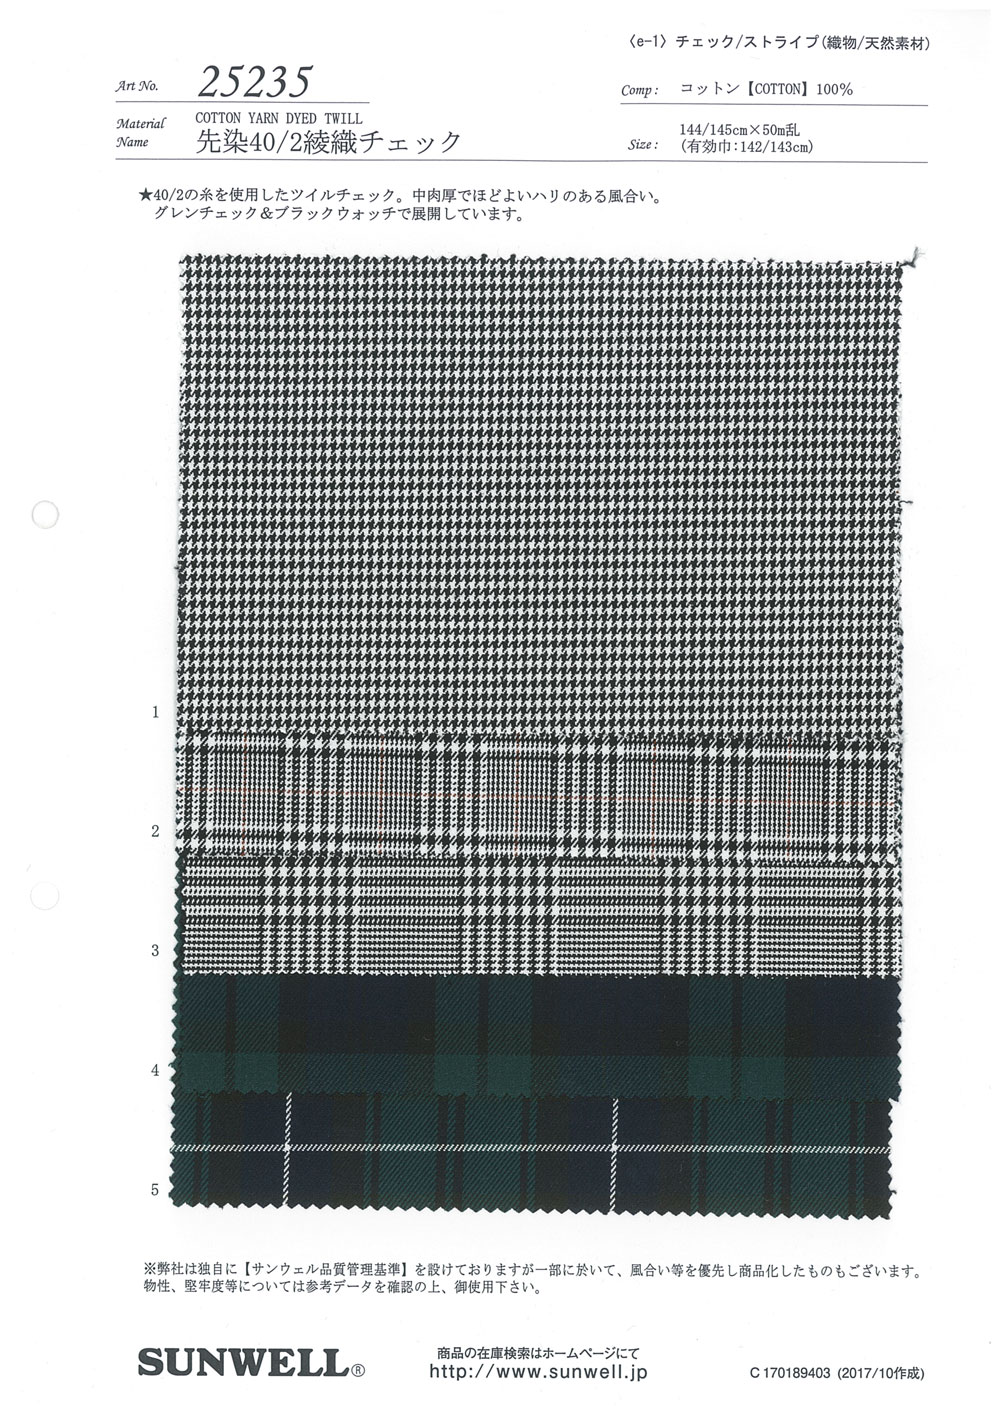 25235 [Fabrication De Textile] SUNWELL